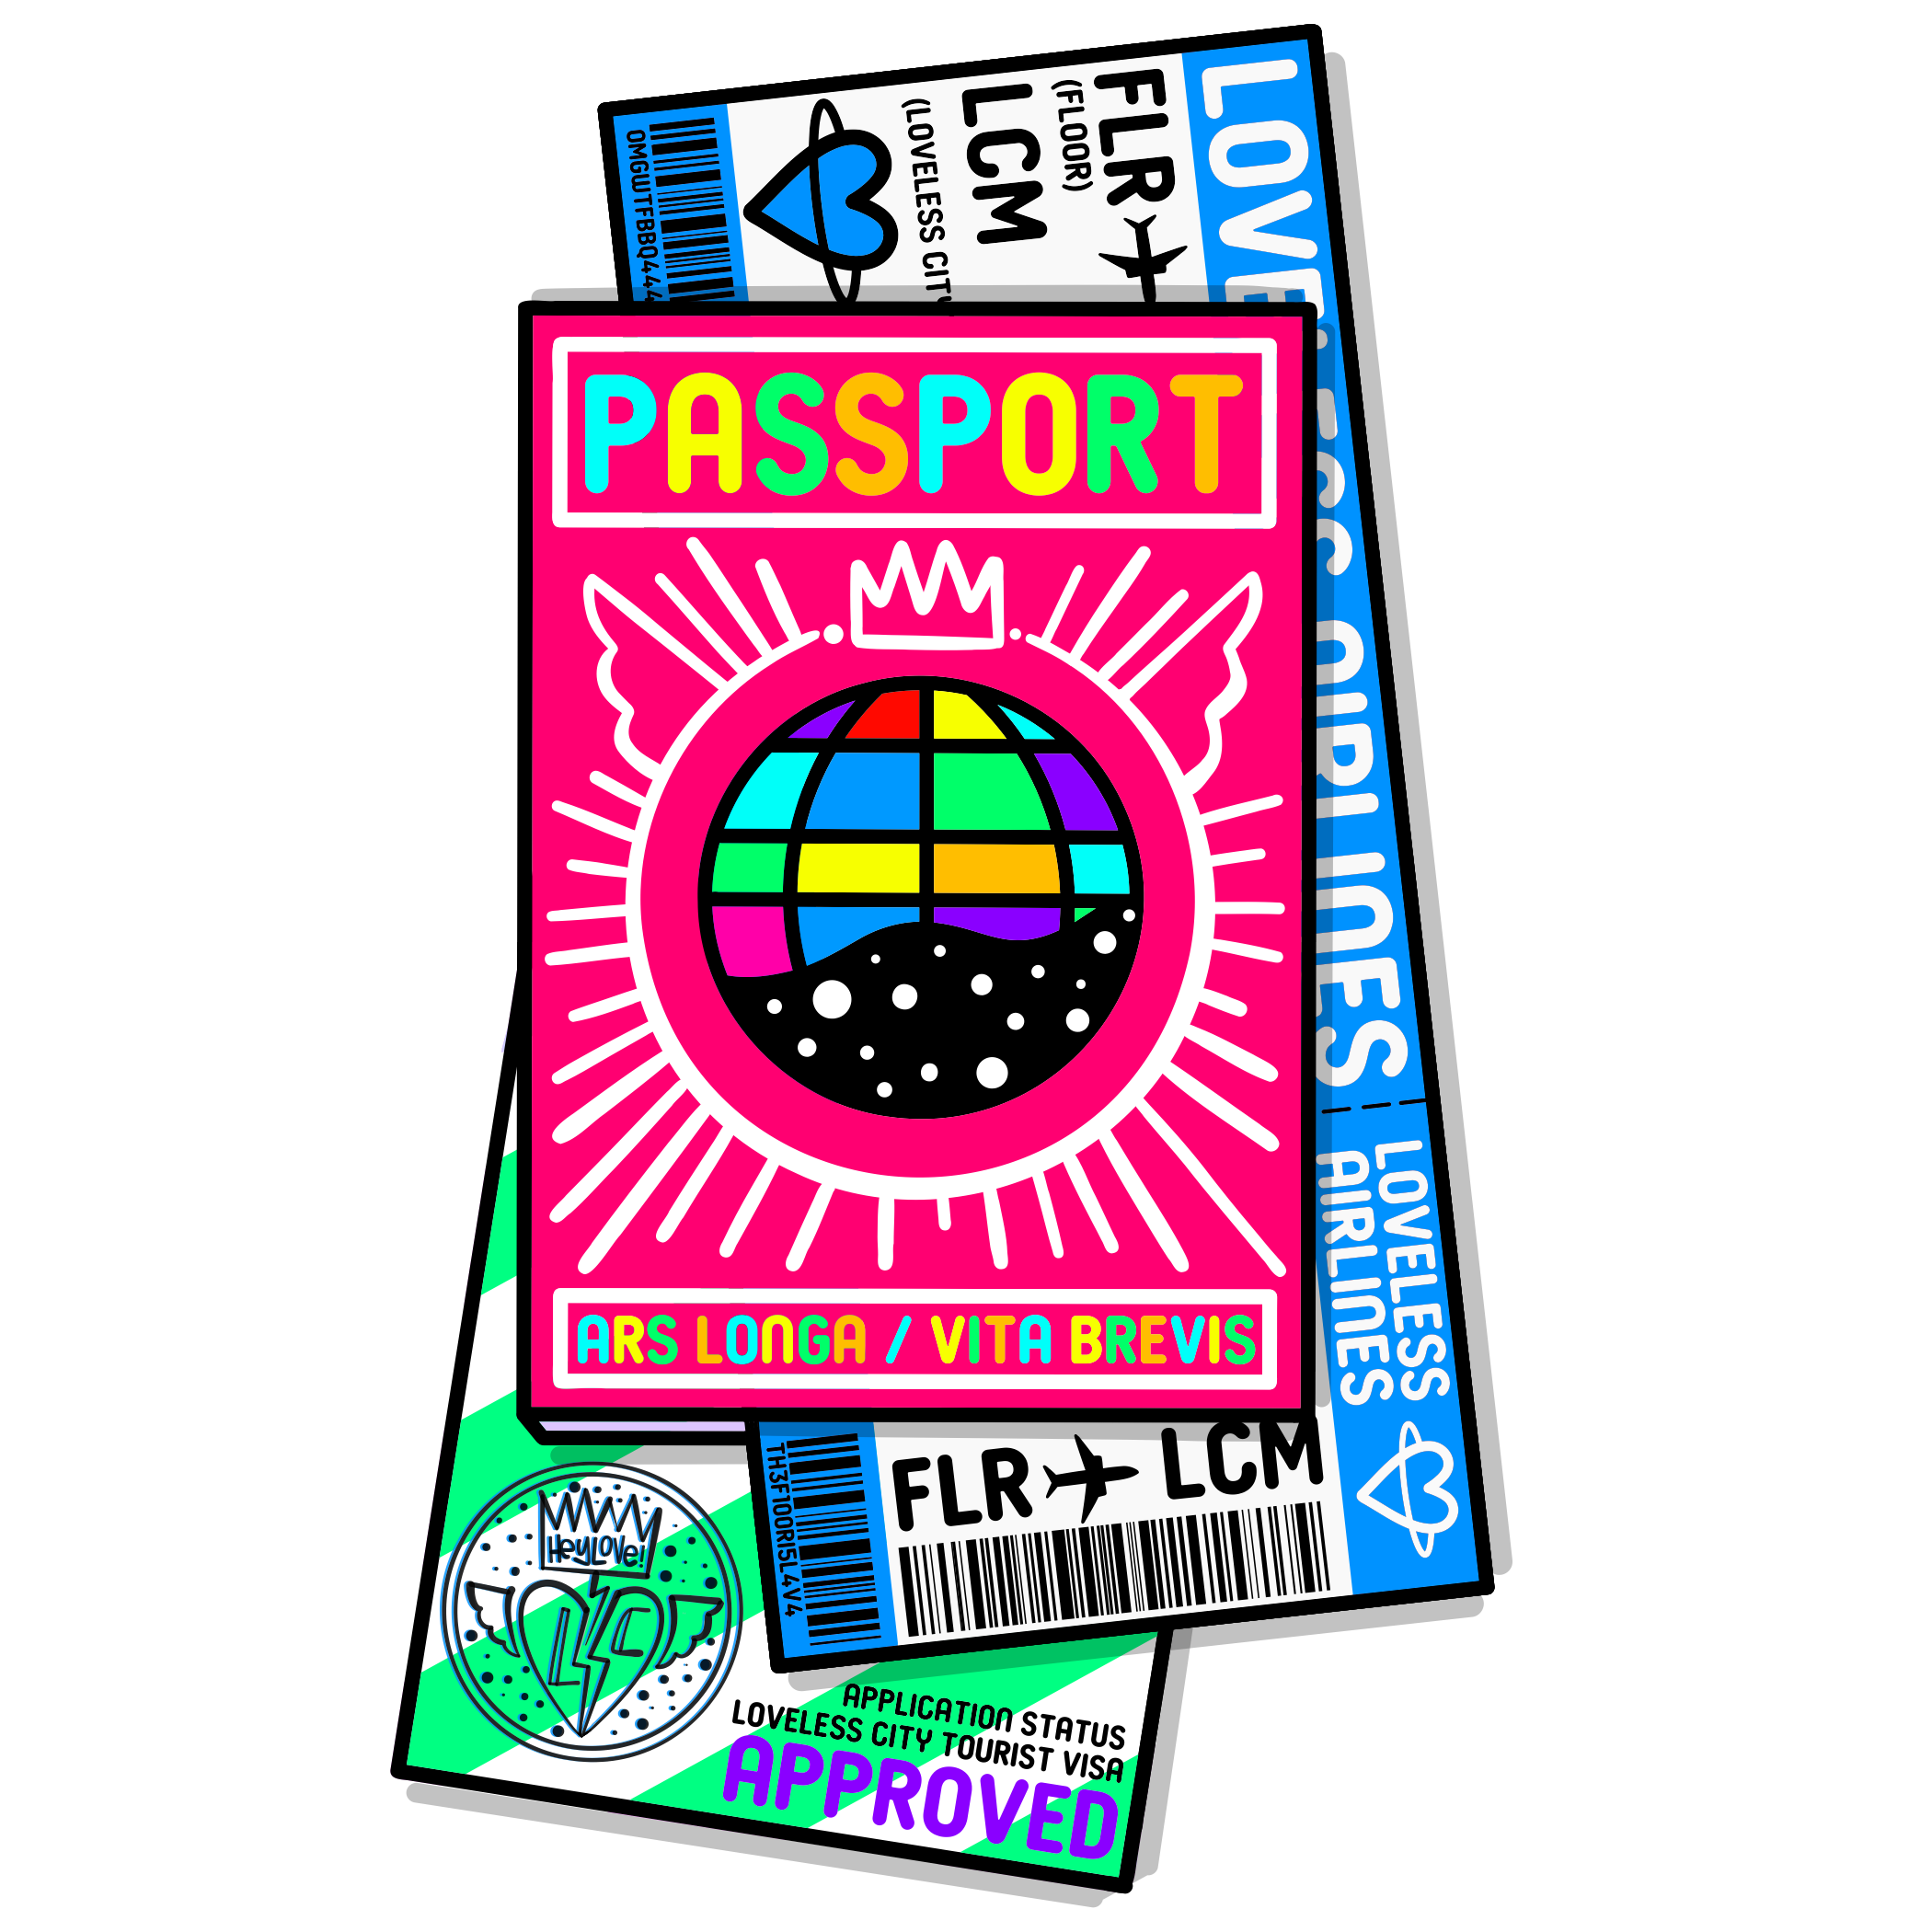 Passport V3 Metropass